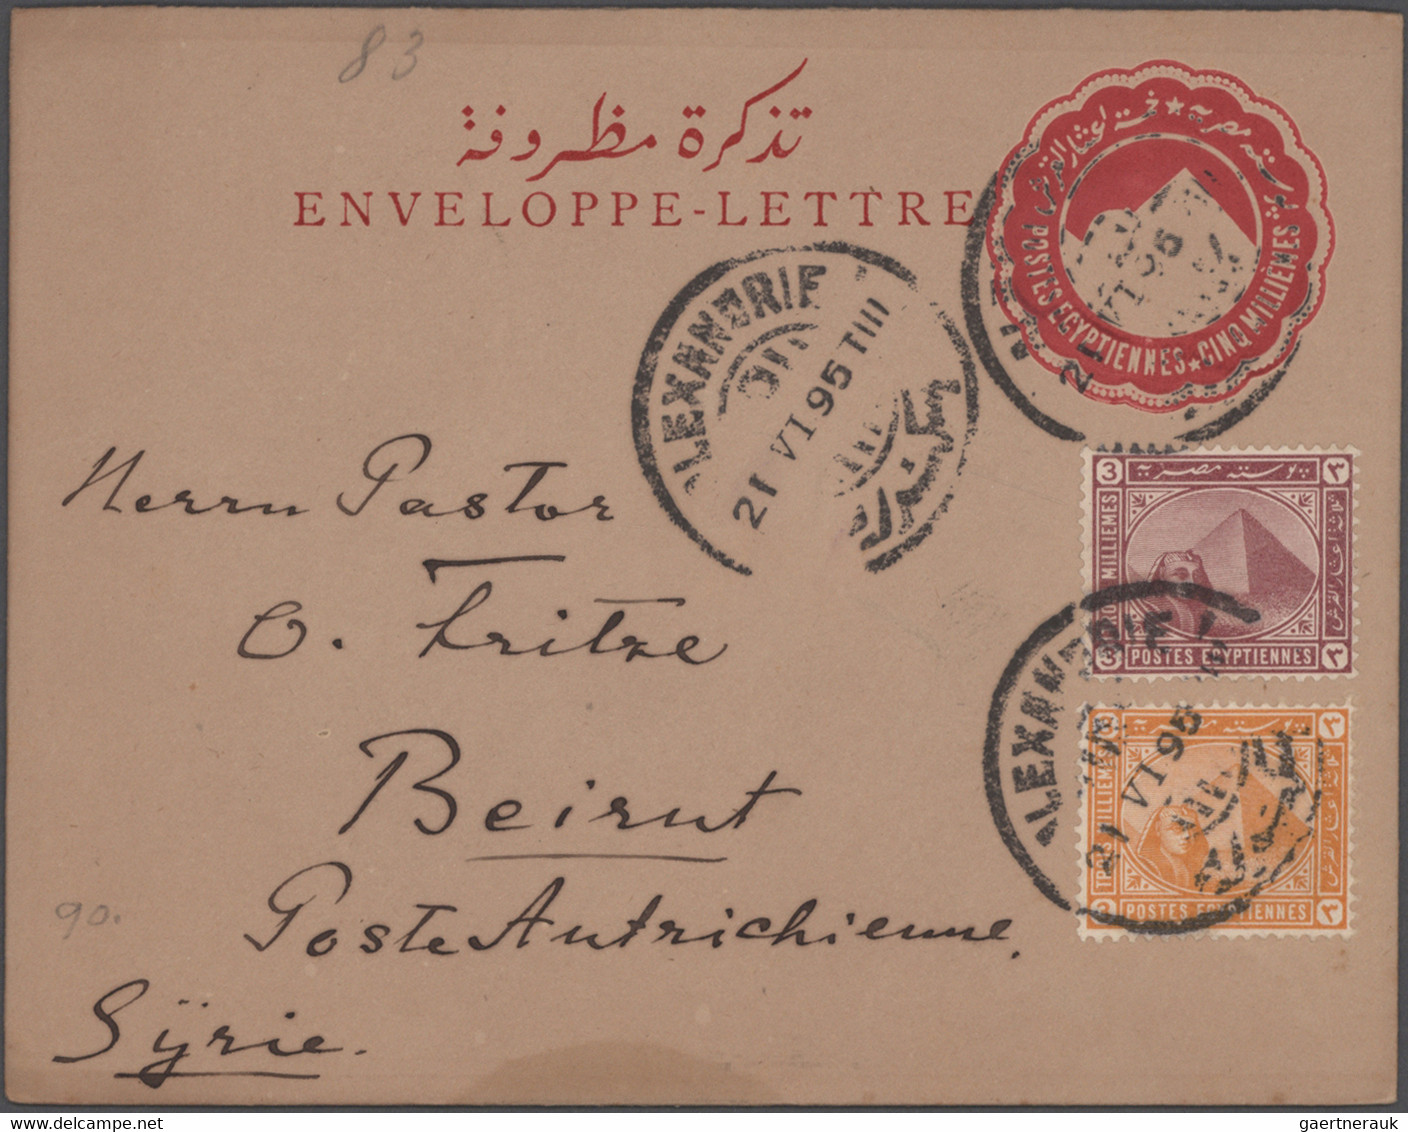 Egypt - postal stationery: 1879-1910's: Collection of 48 postal stationery cards